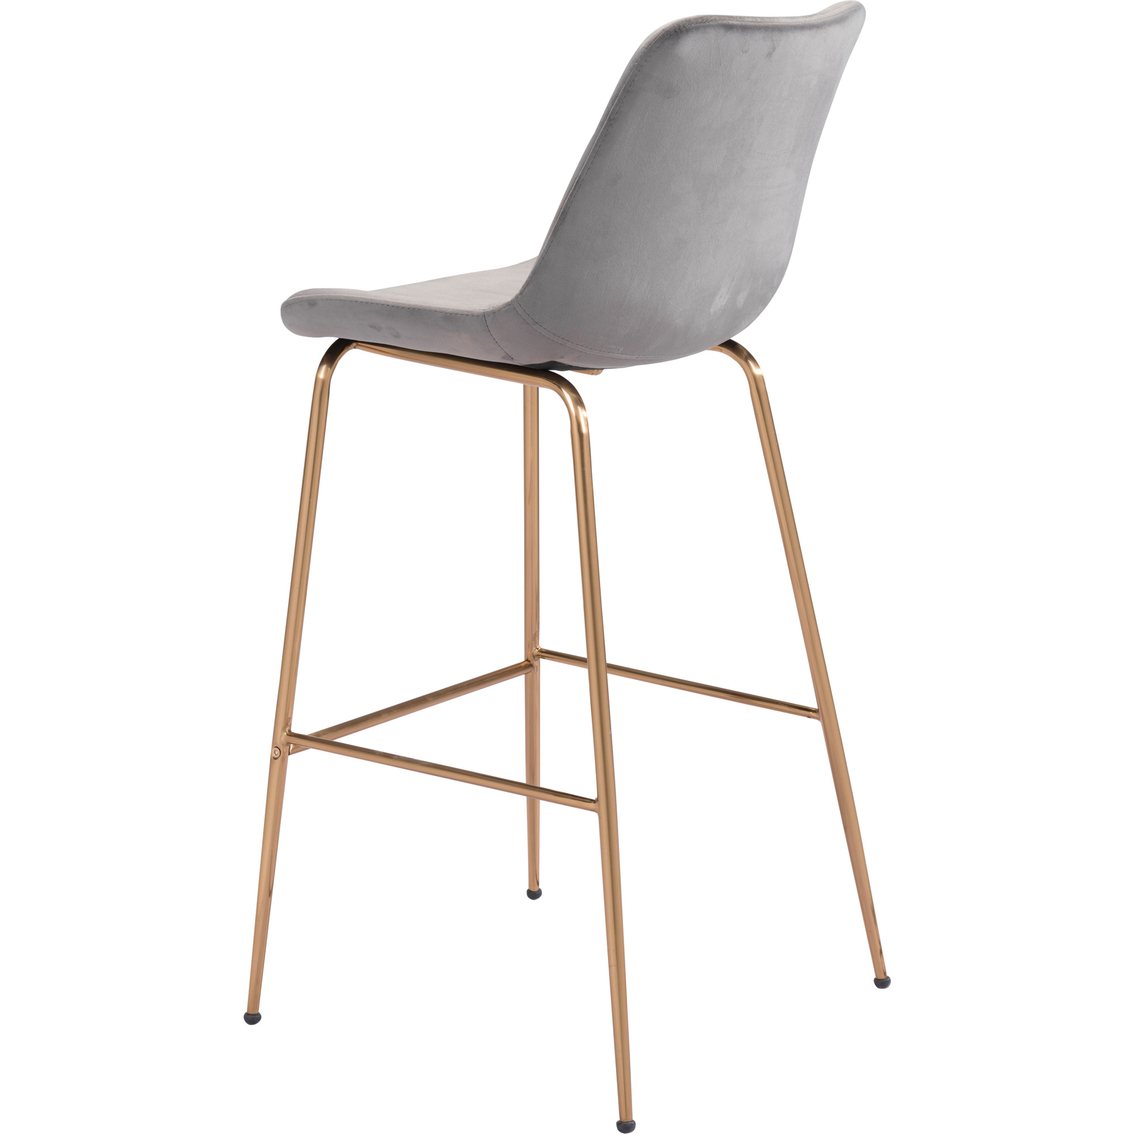 Zuo Modern Tony Bar Chair - Image 5 of 10